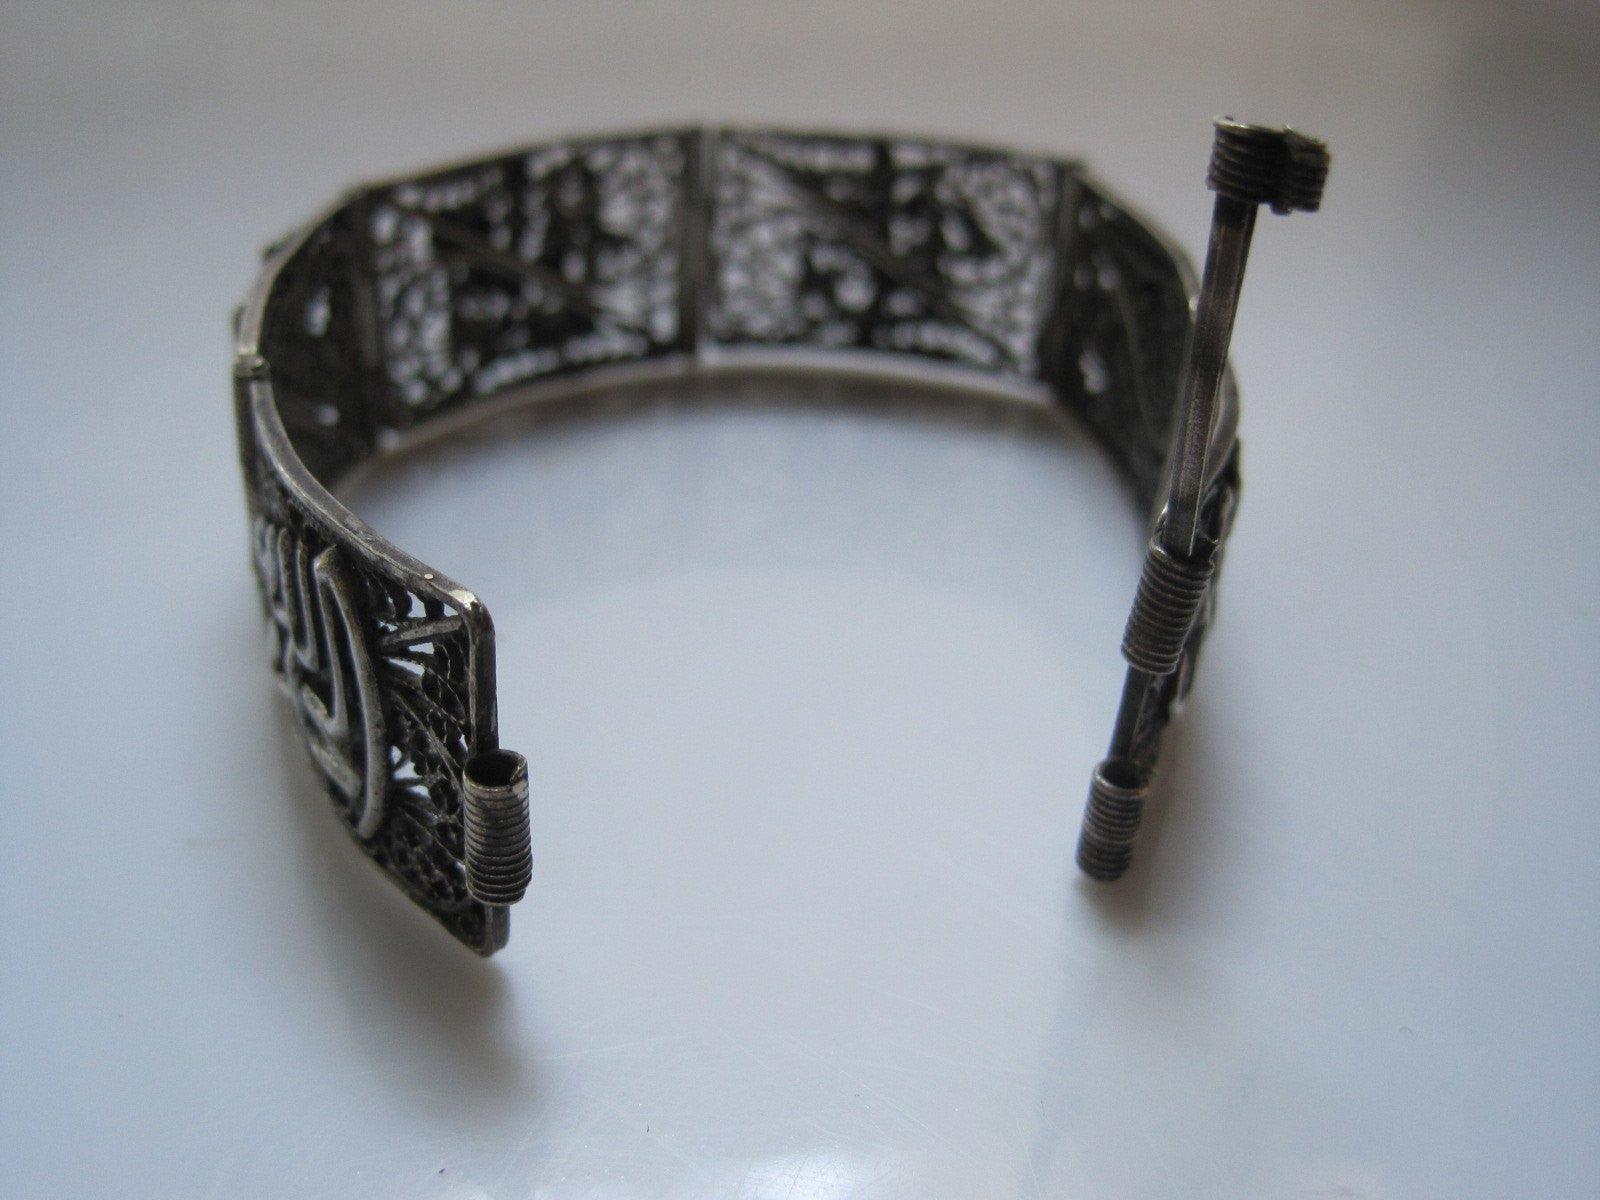 Vintage Egyptian Silver Filigree Link Bracelet with Arabic Calligraphy - Anteeka